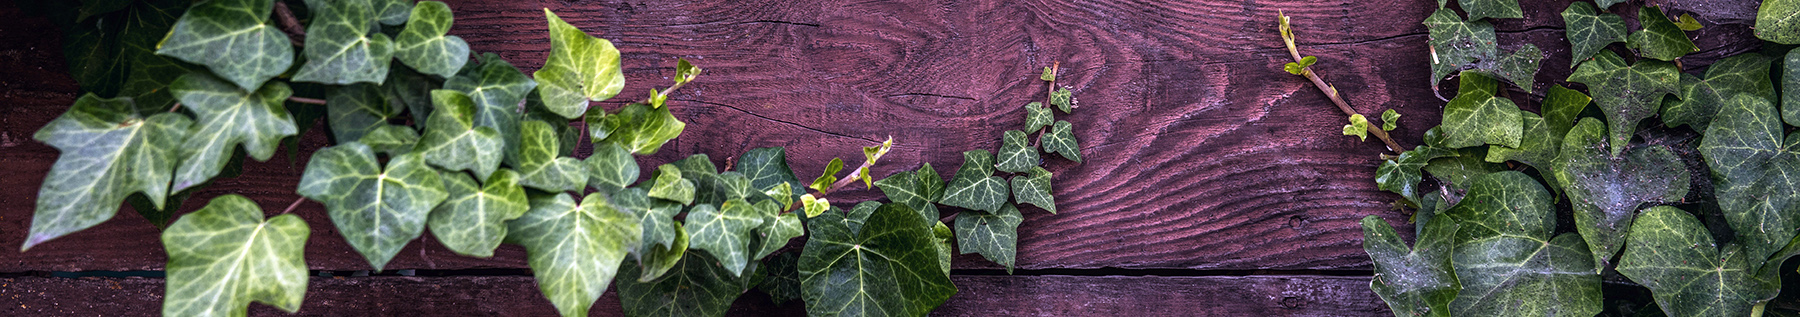 invasive plant - English Ivy